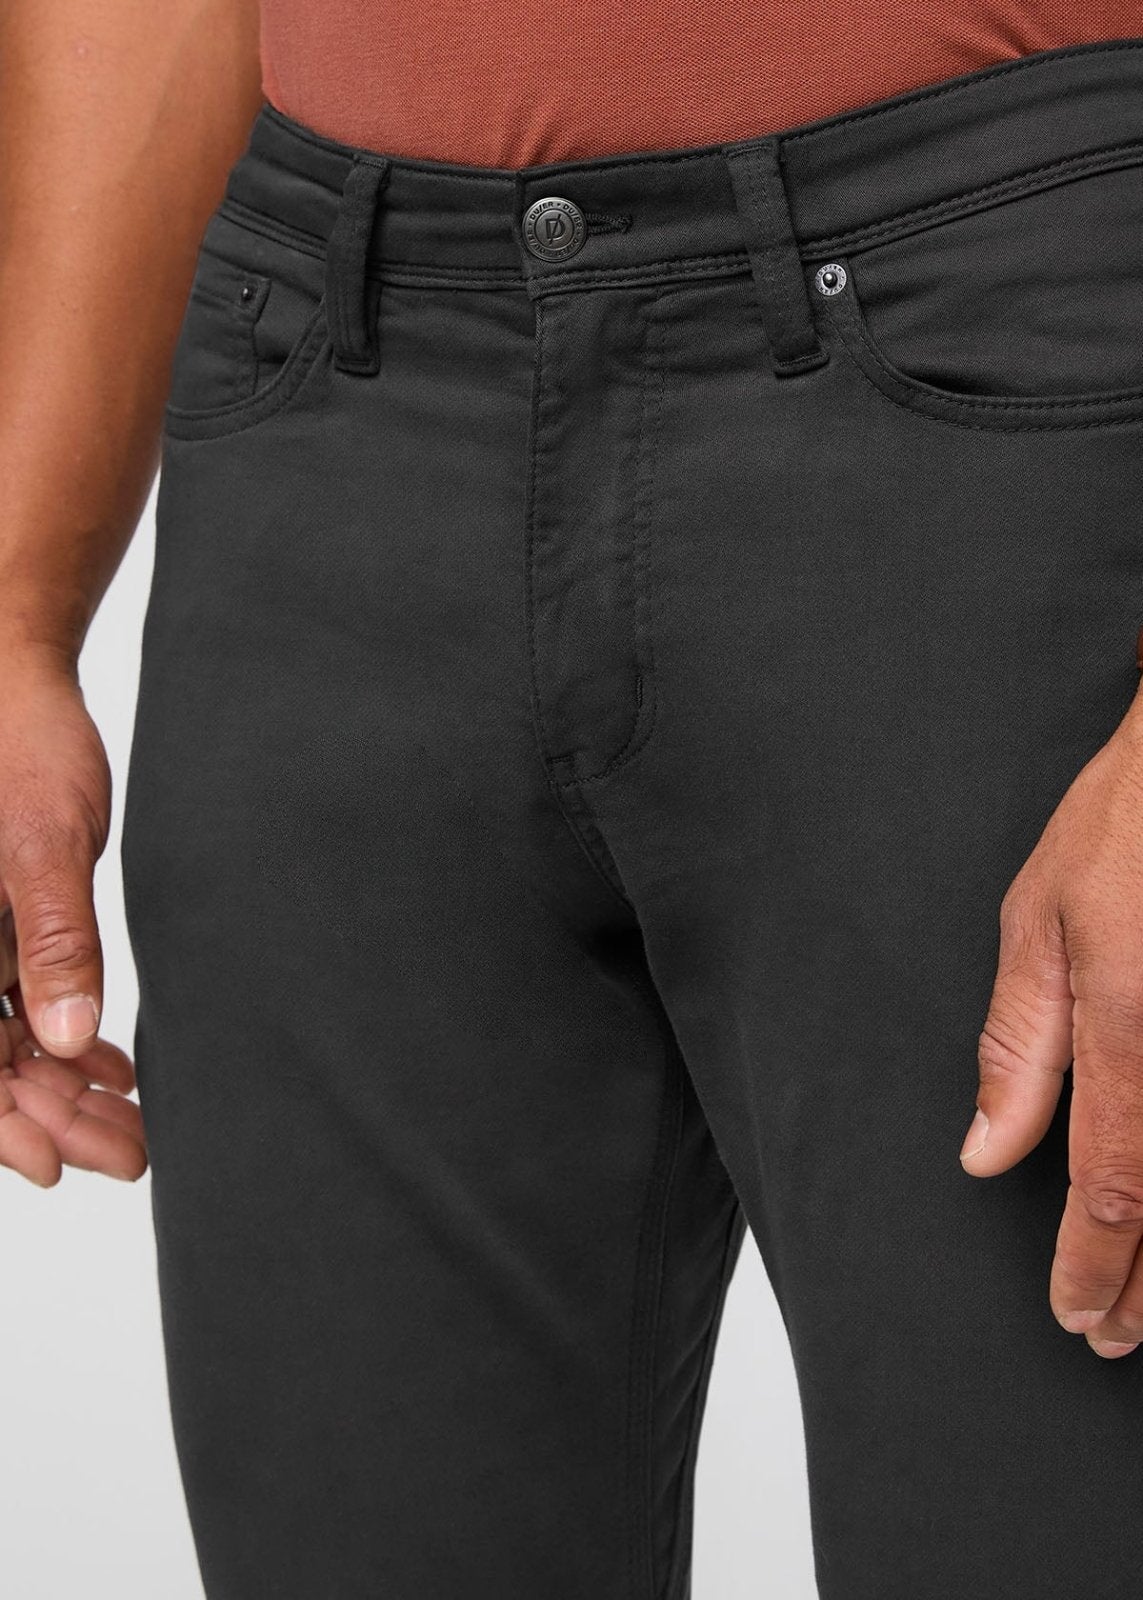 Duer Men's No Sweat Pant Slim - Tobacco, 30W X 32L at  Men's Clothing  store